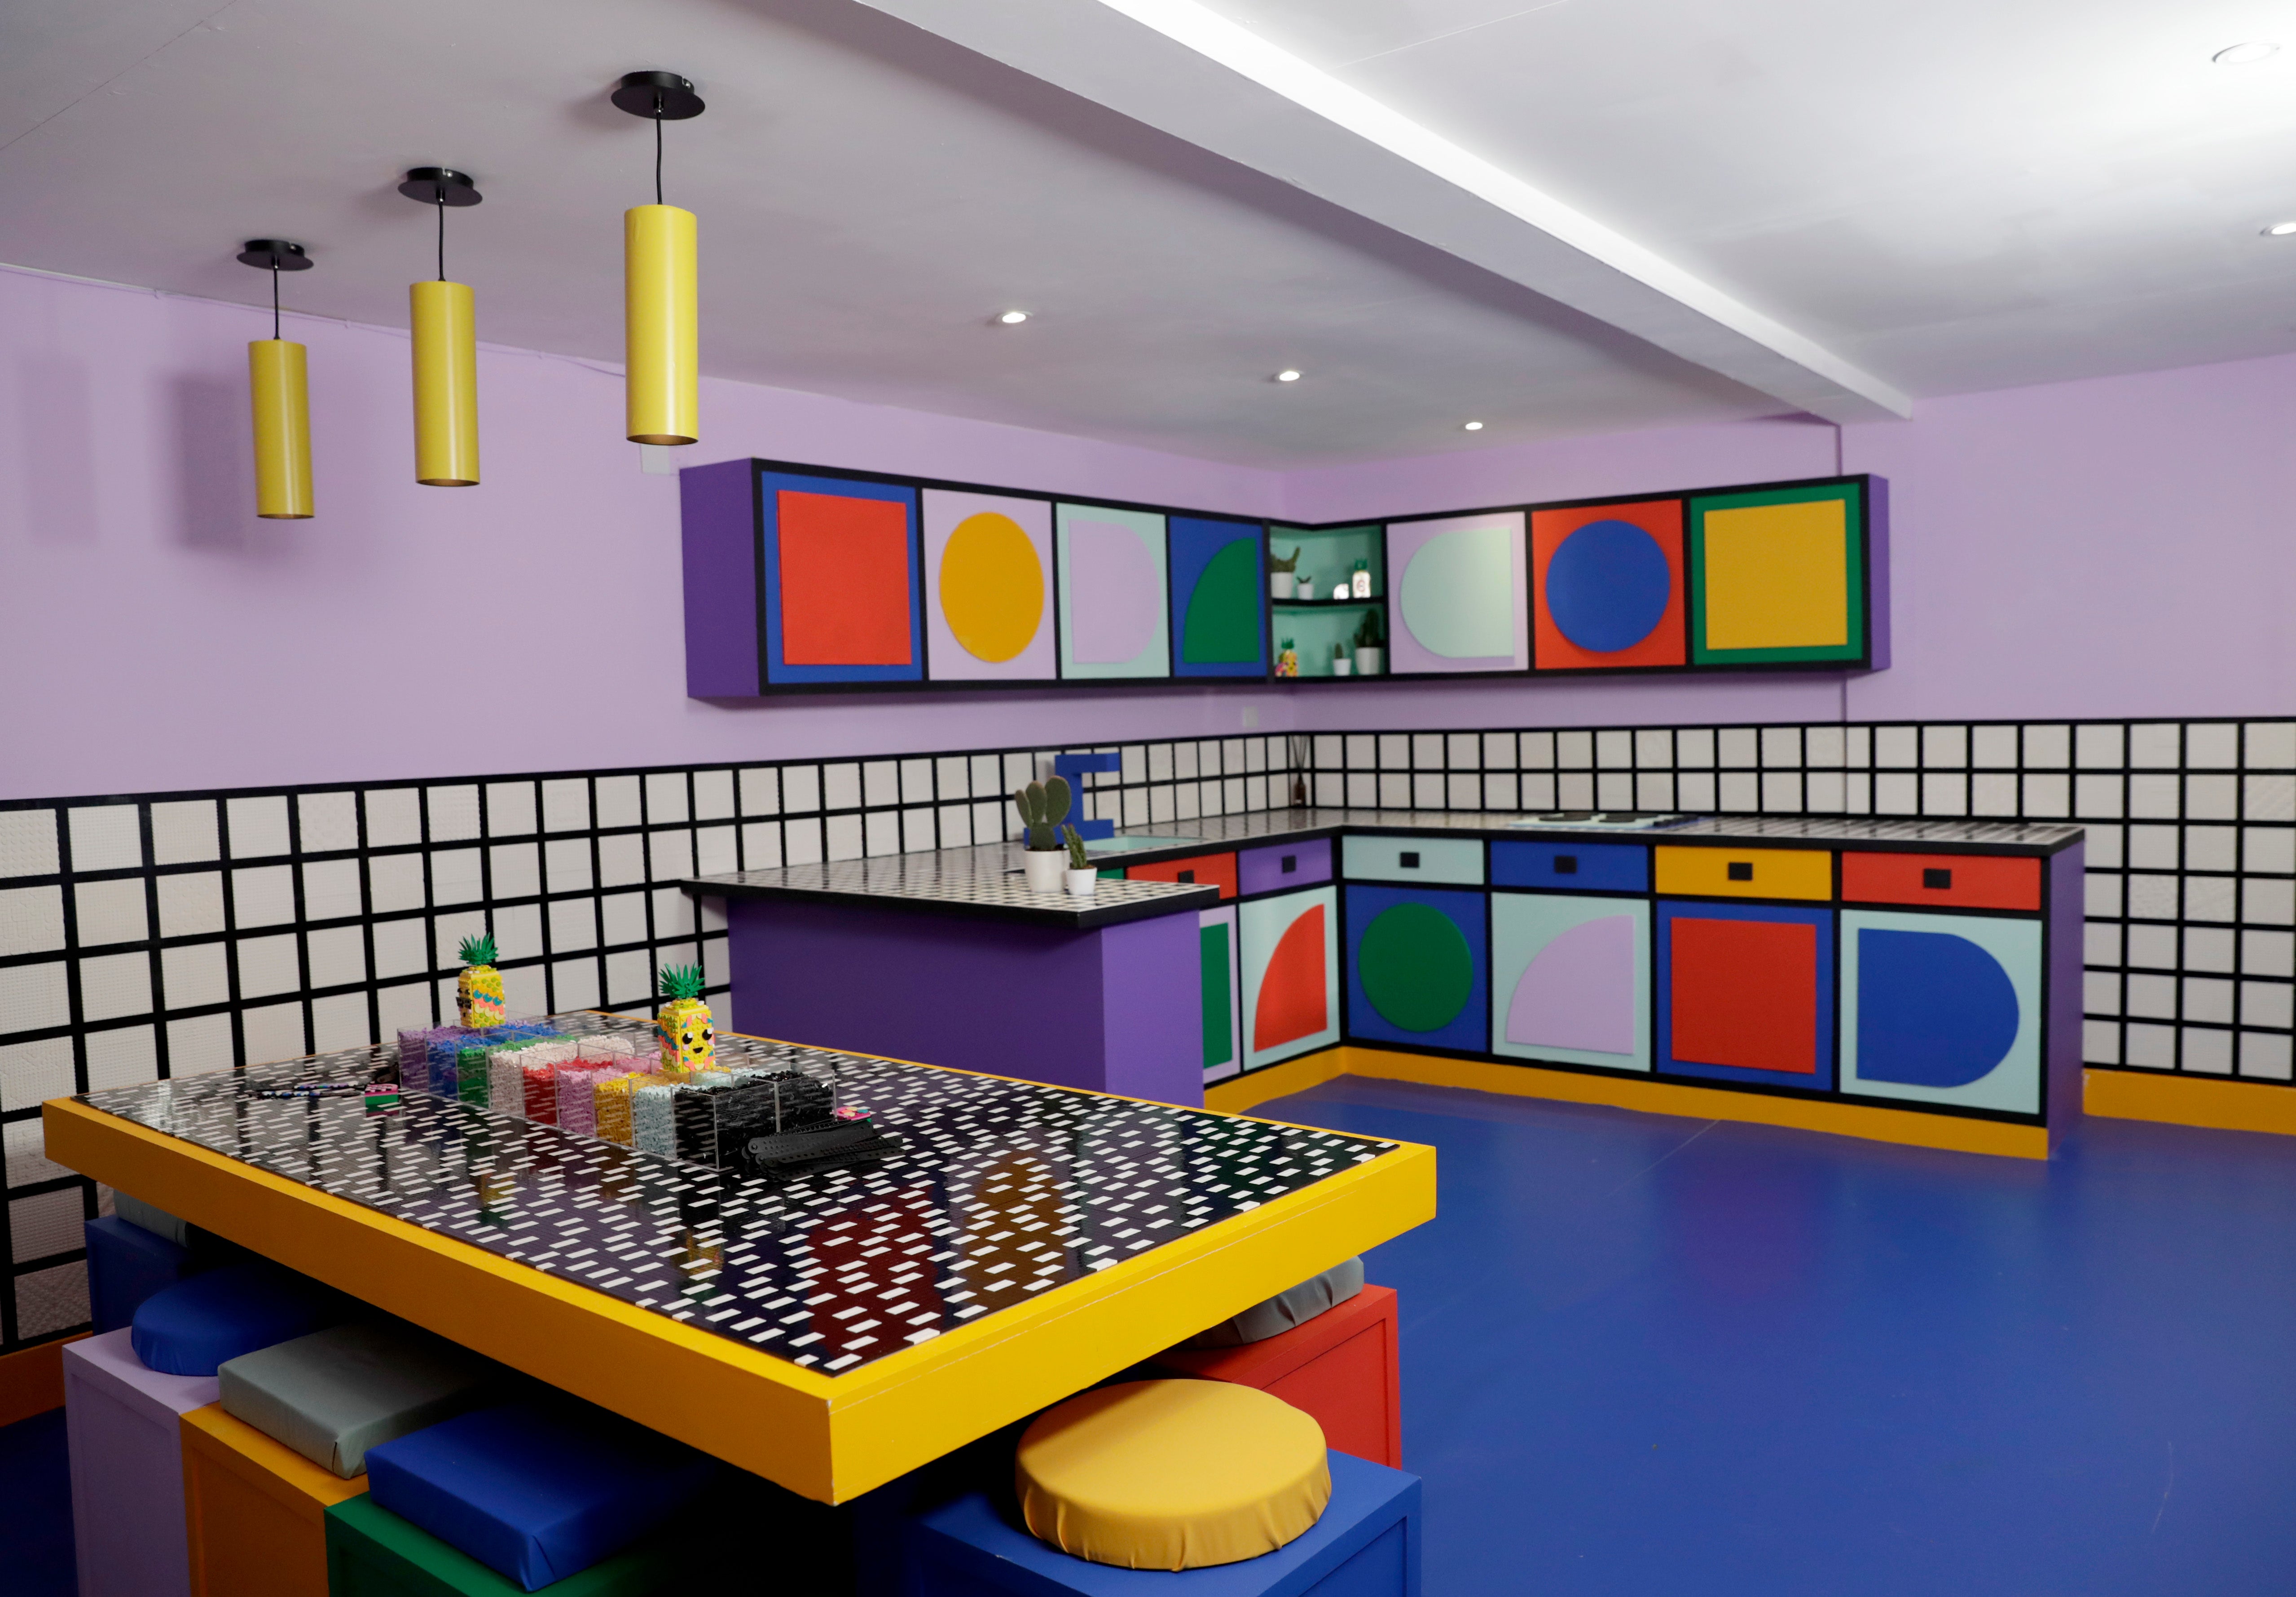 Colorful lego kitchen